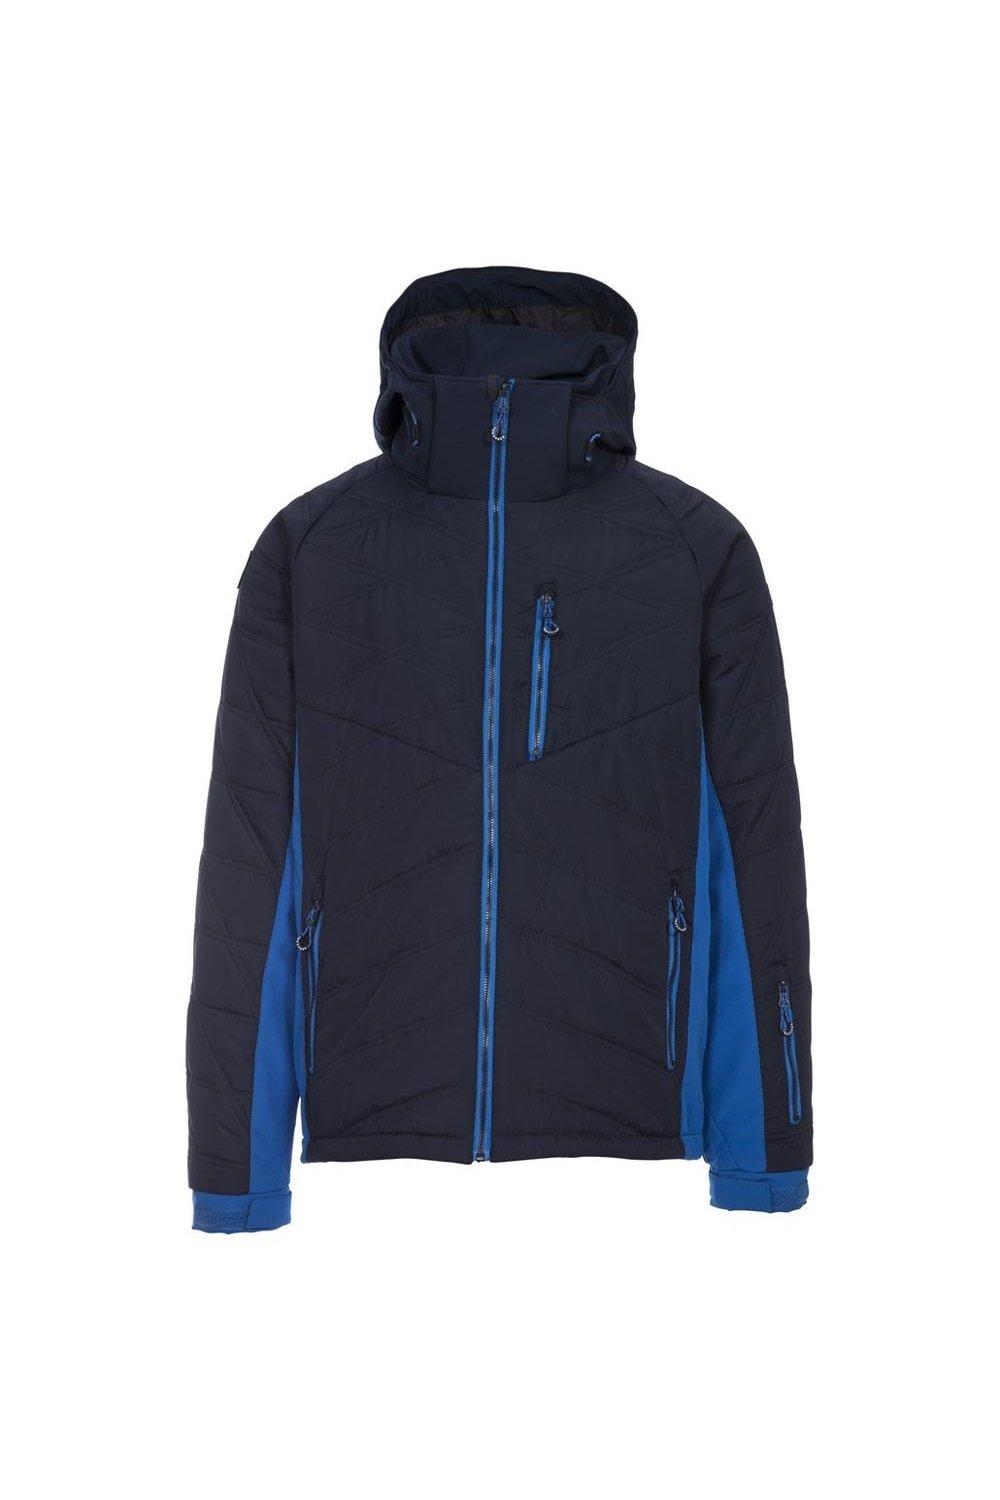 Trespass Men's Abbotsbury Ski Jacket|Size: L|navy